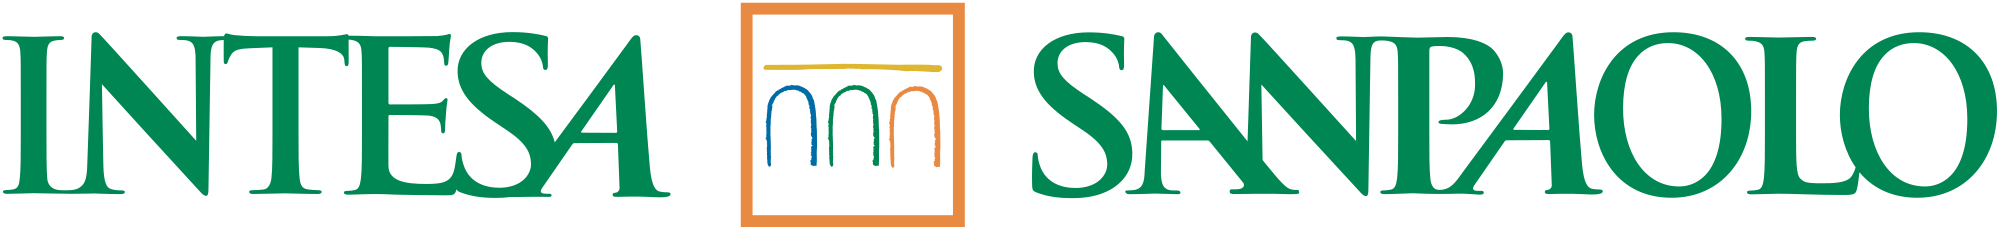 BANCA INTESA Brand Logo